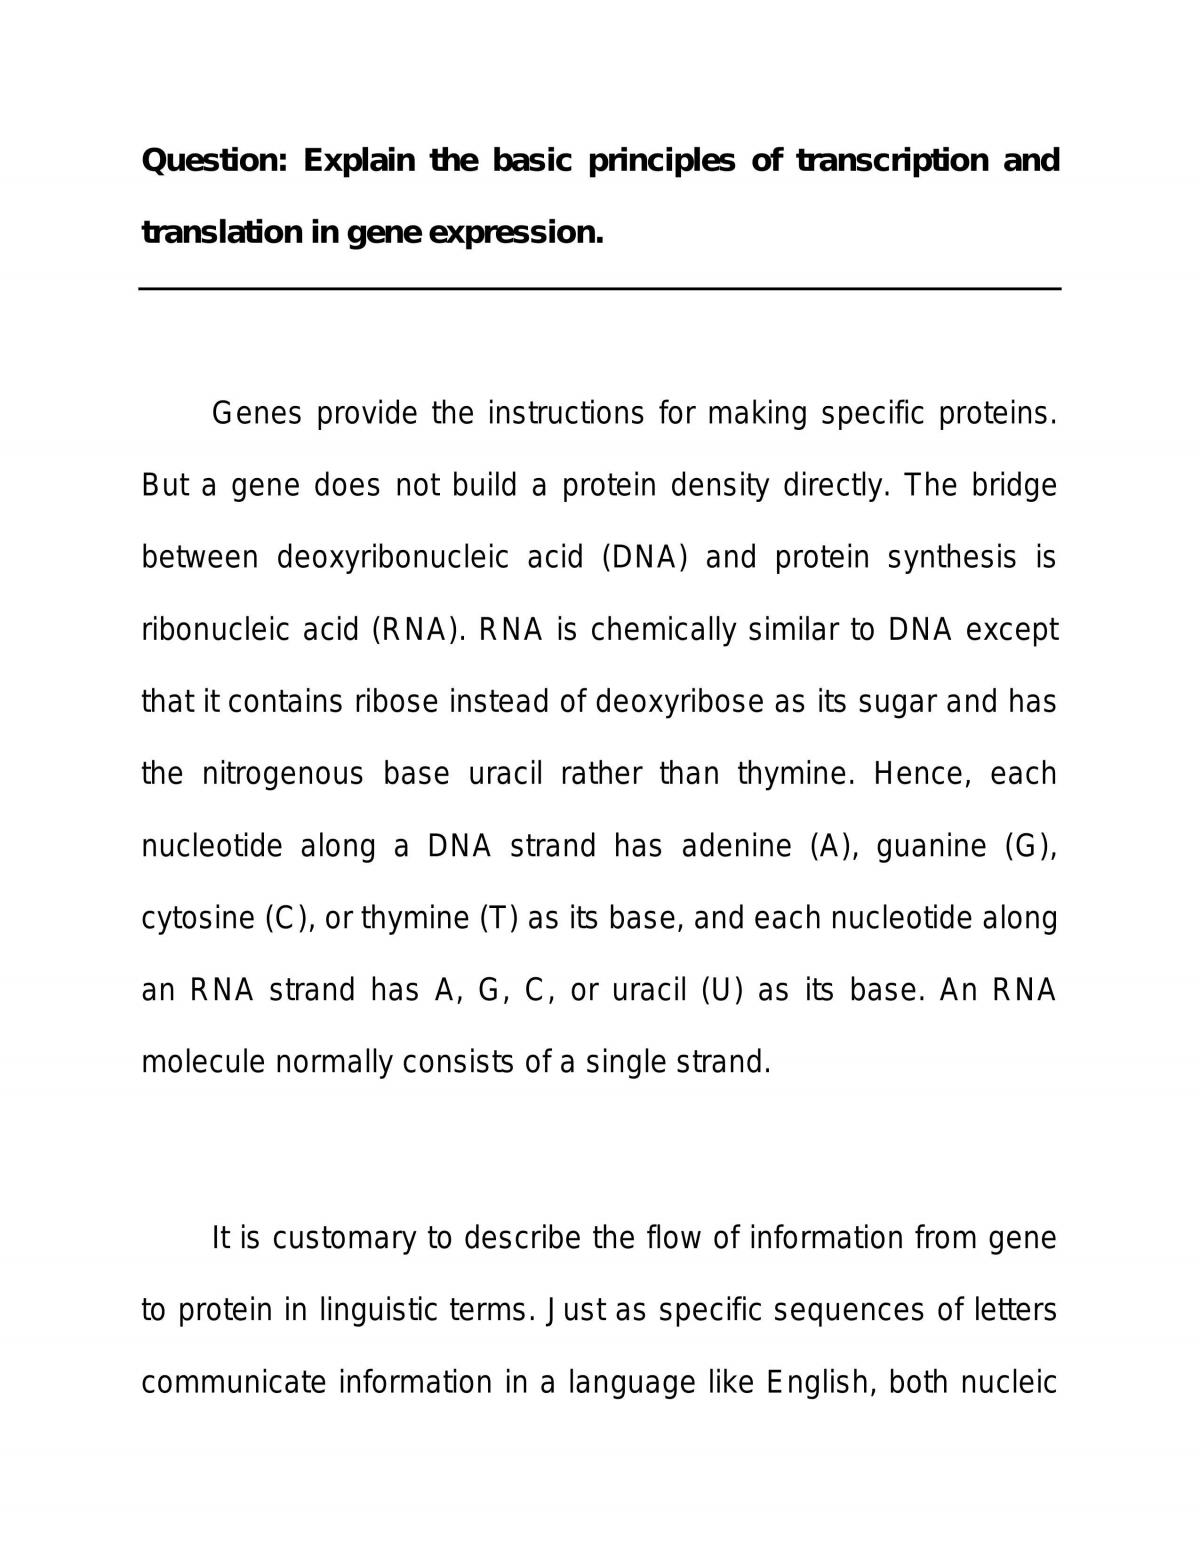 Essay Explaining the Basic Principles of Transcription and Translation - Page 1